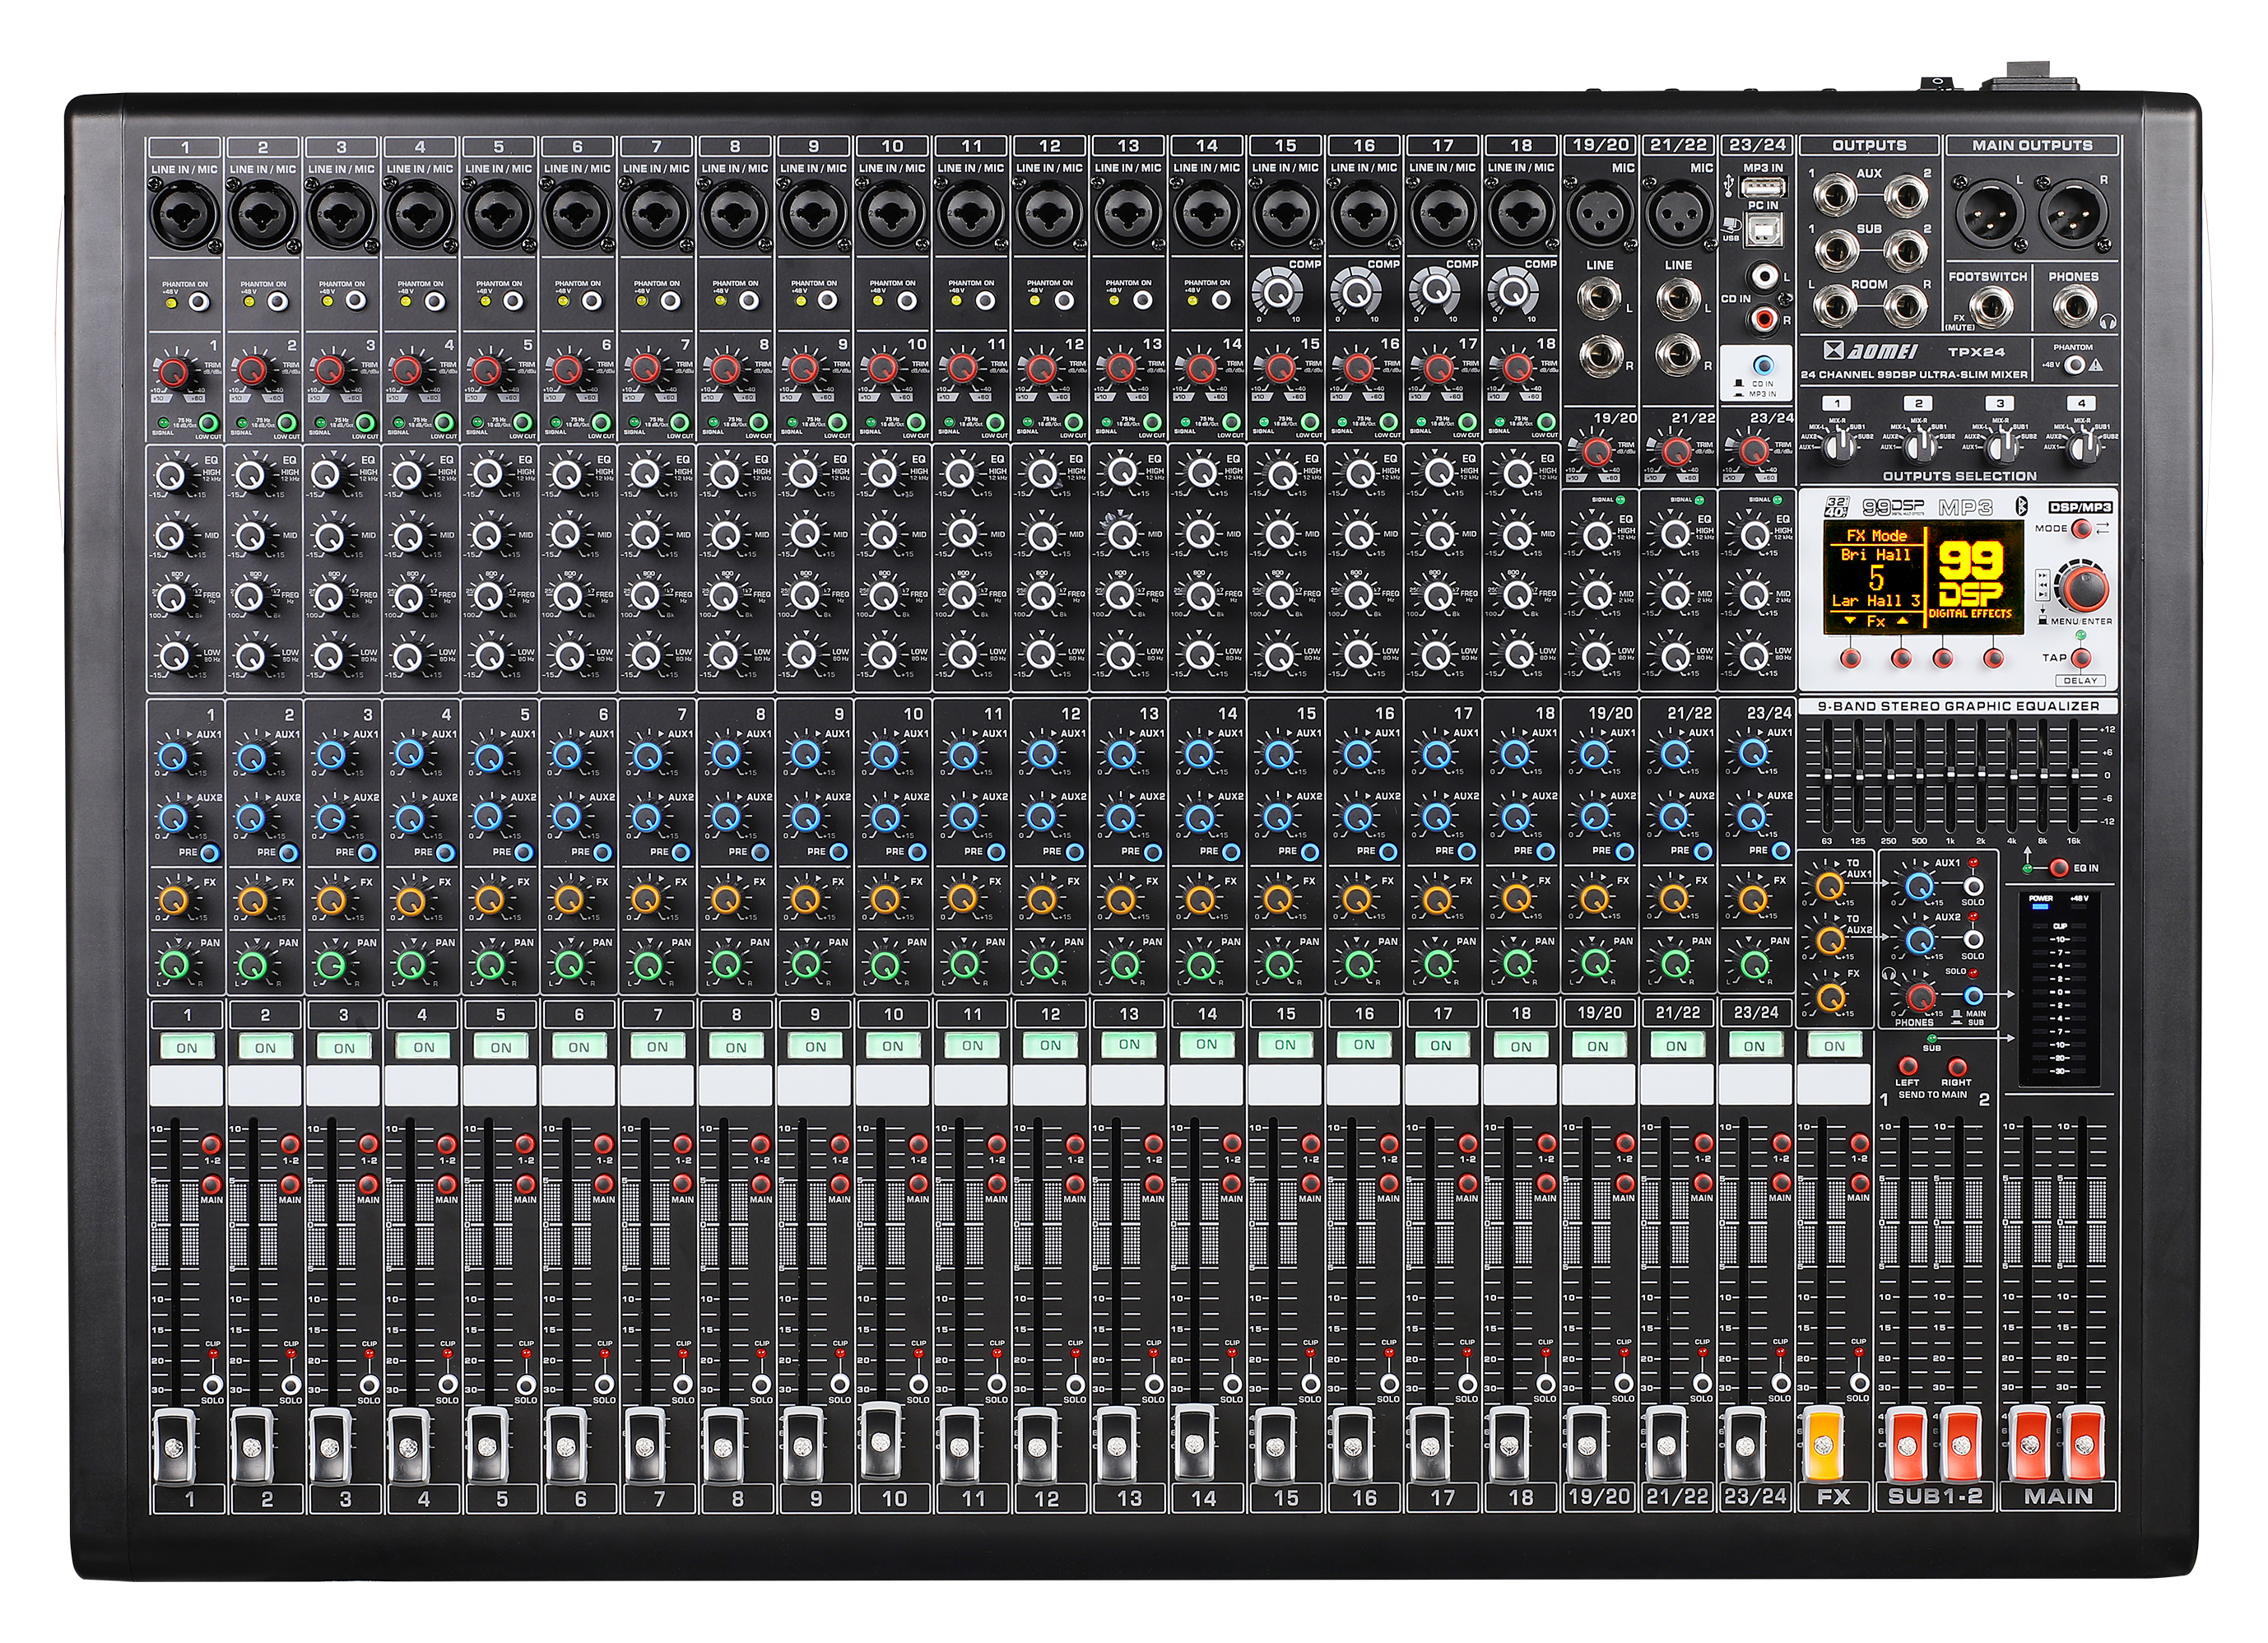 TPX series professional mixer aomei mixer mixer audio console